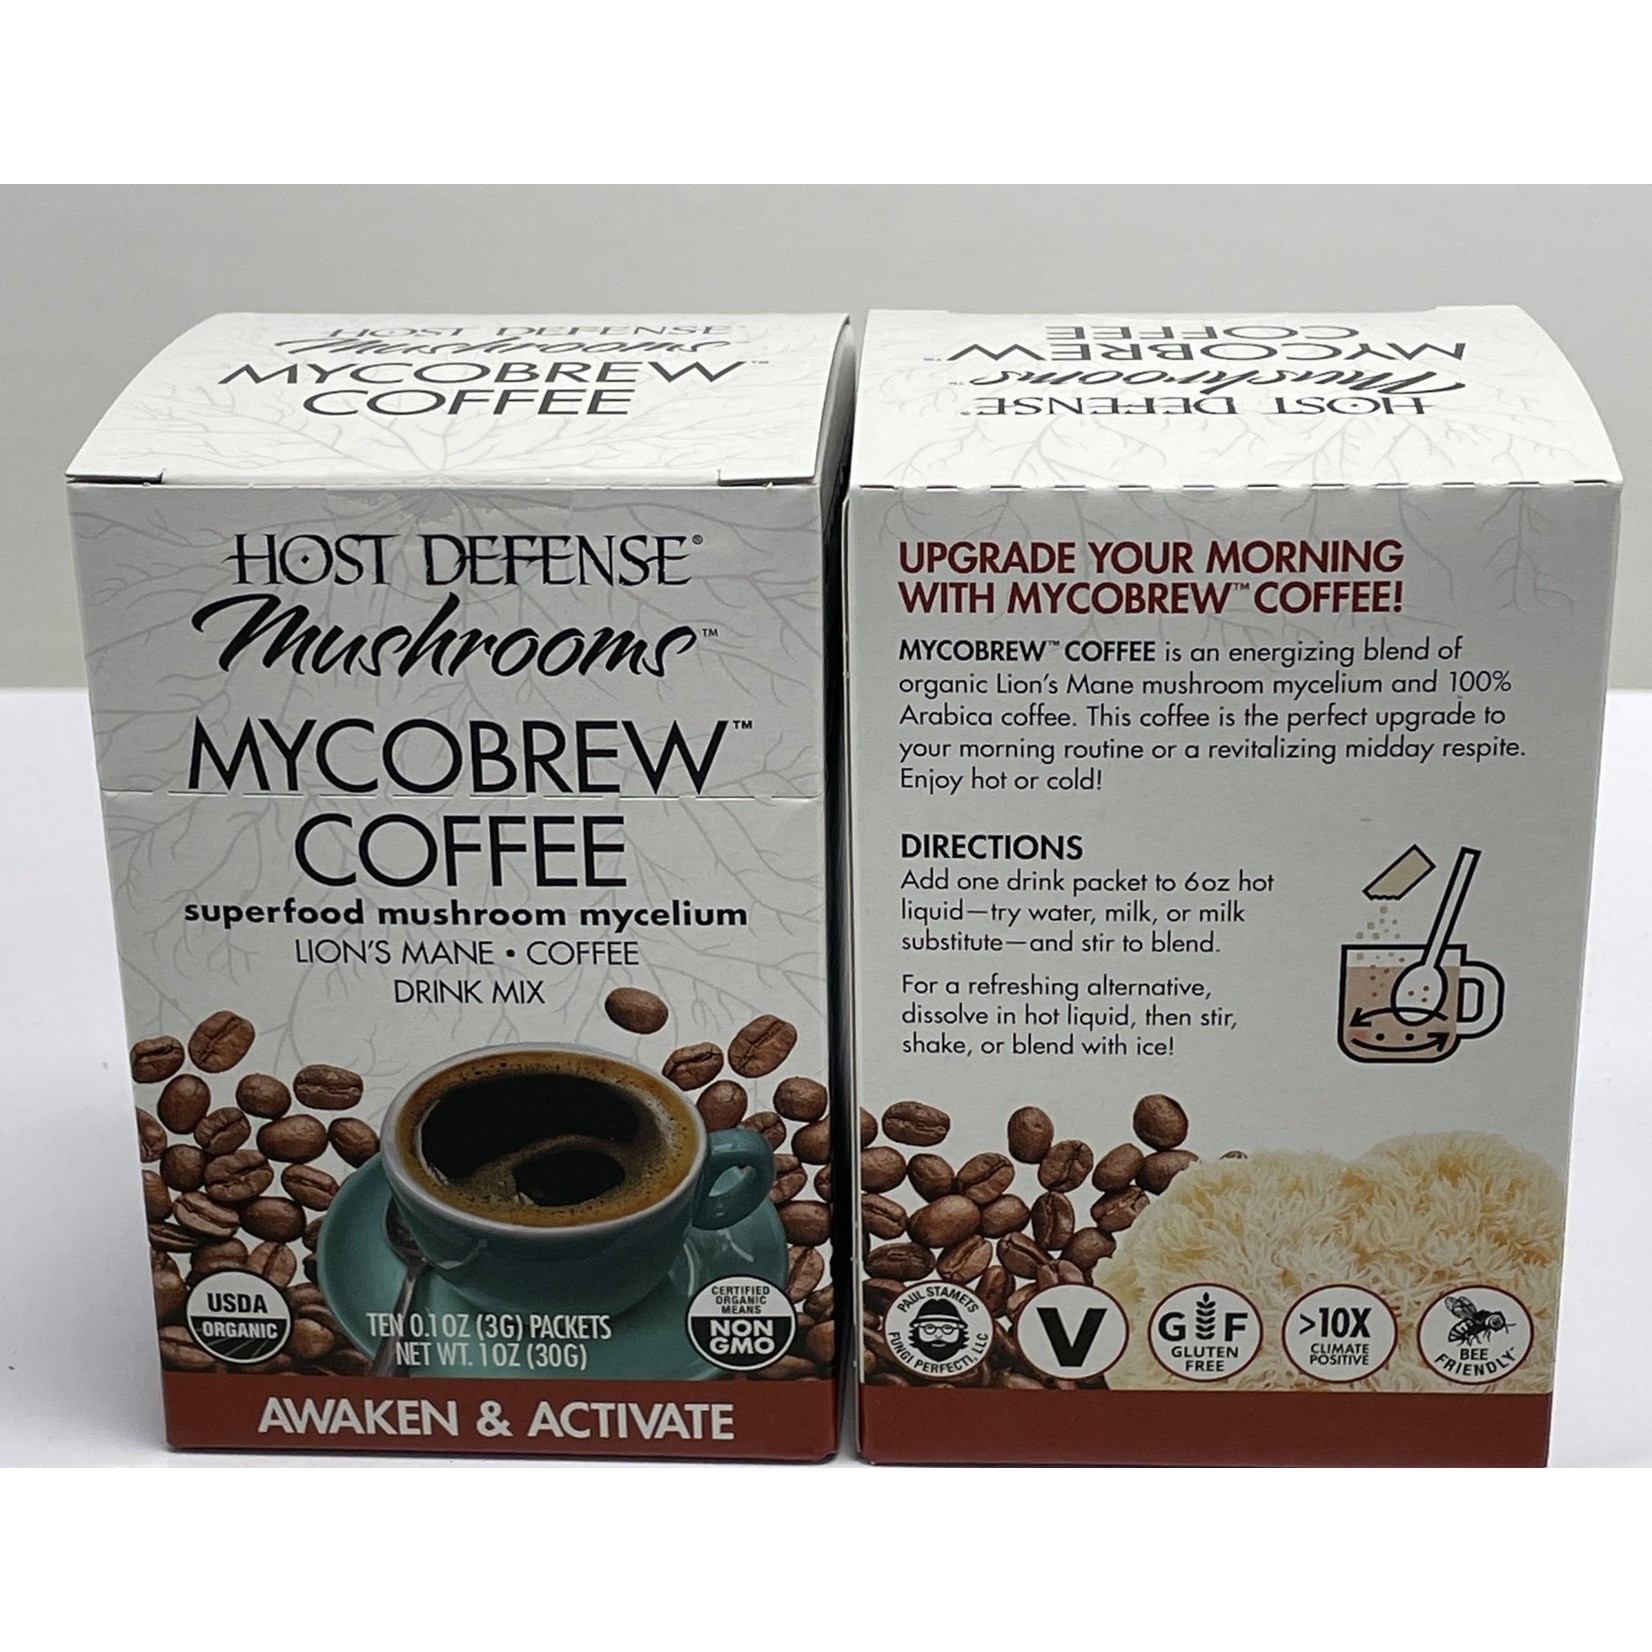 Host Defense Host Defense MycoBrew Mushroom Coffee 10 Pack